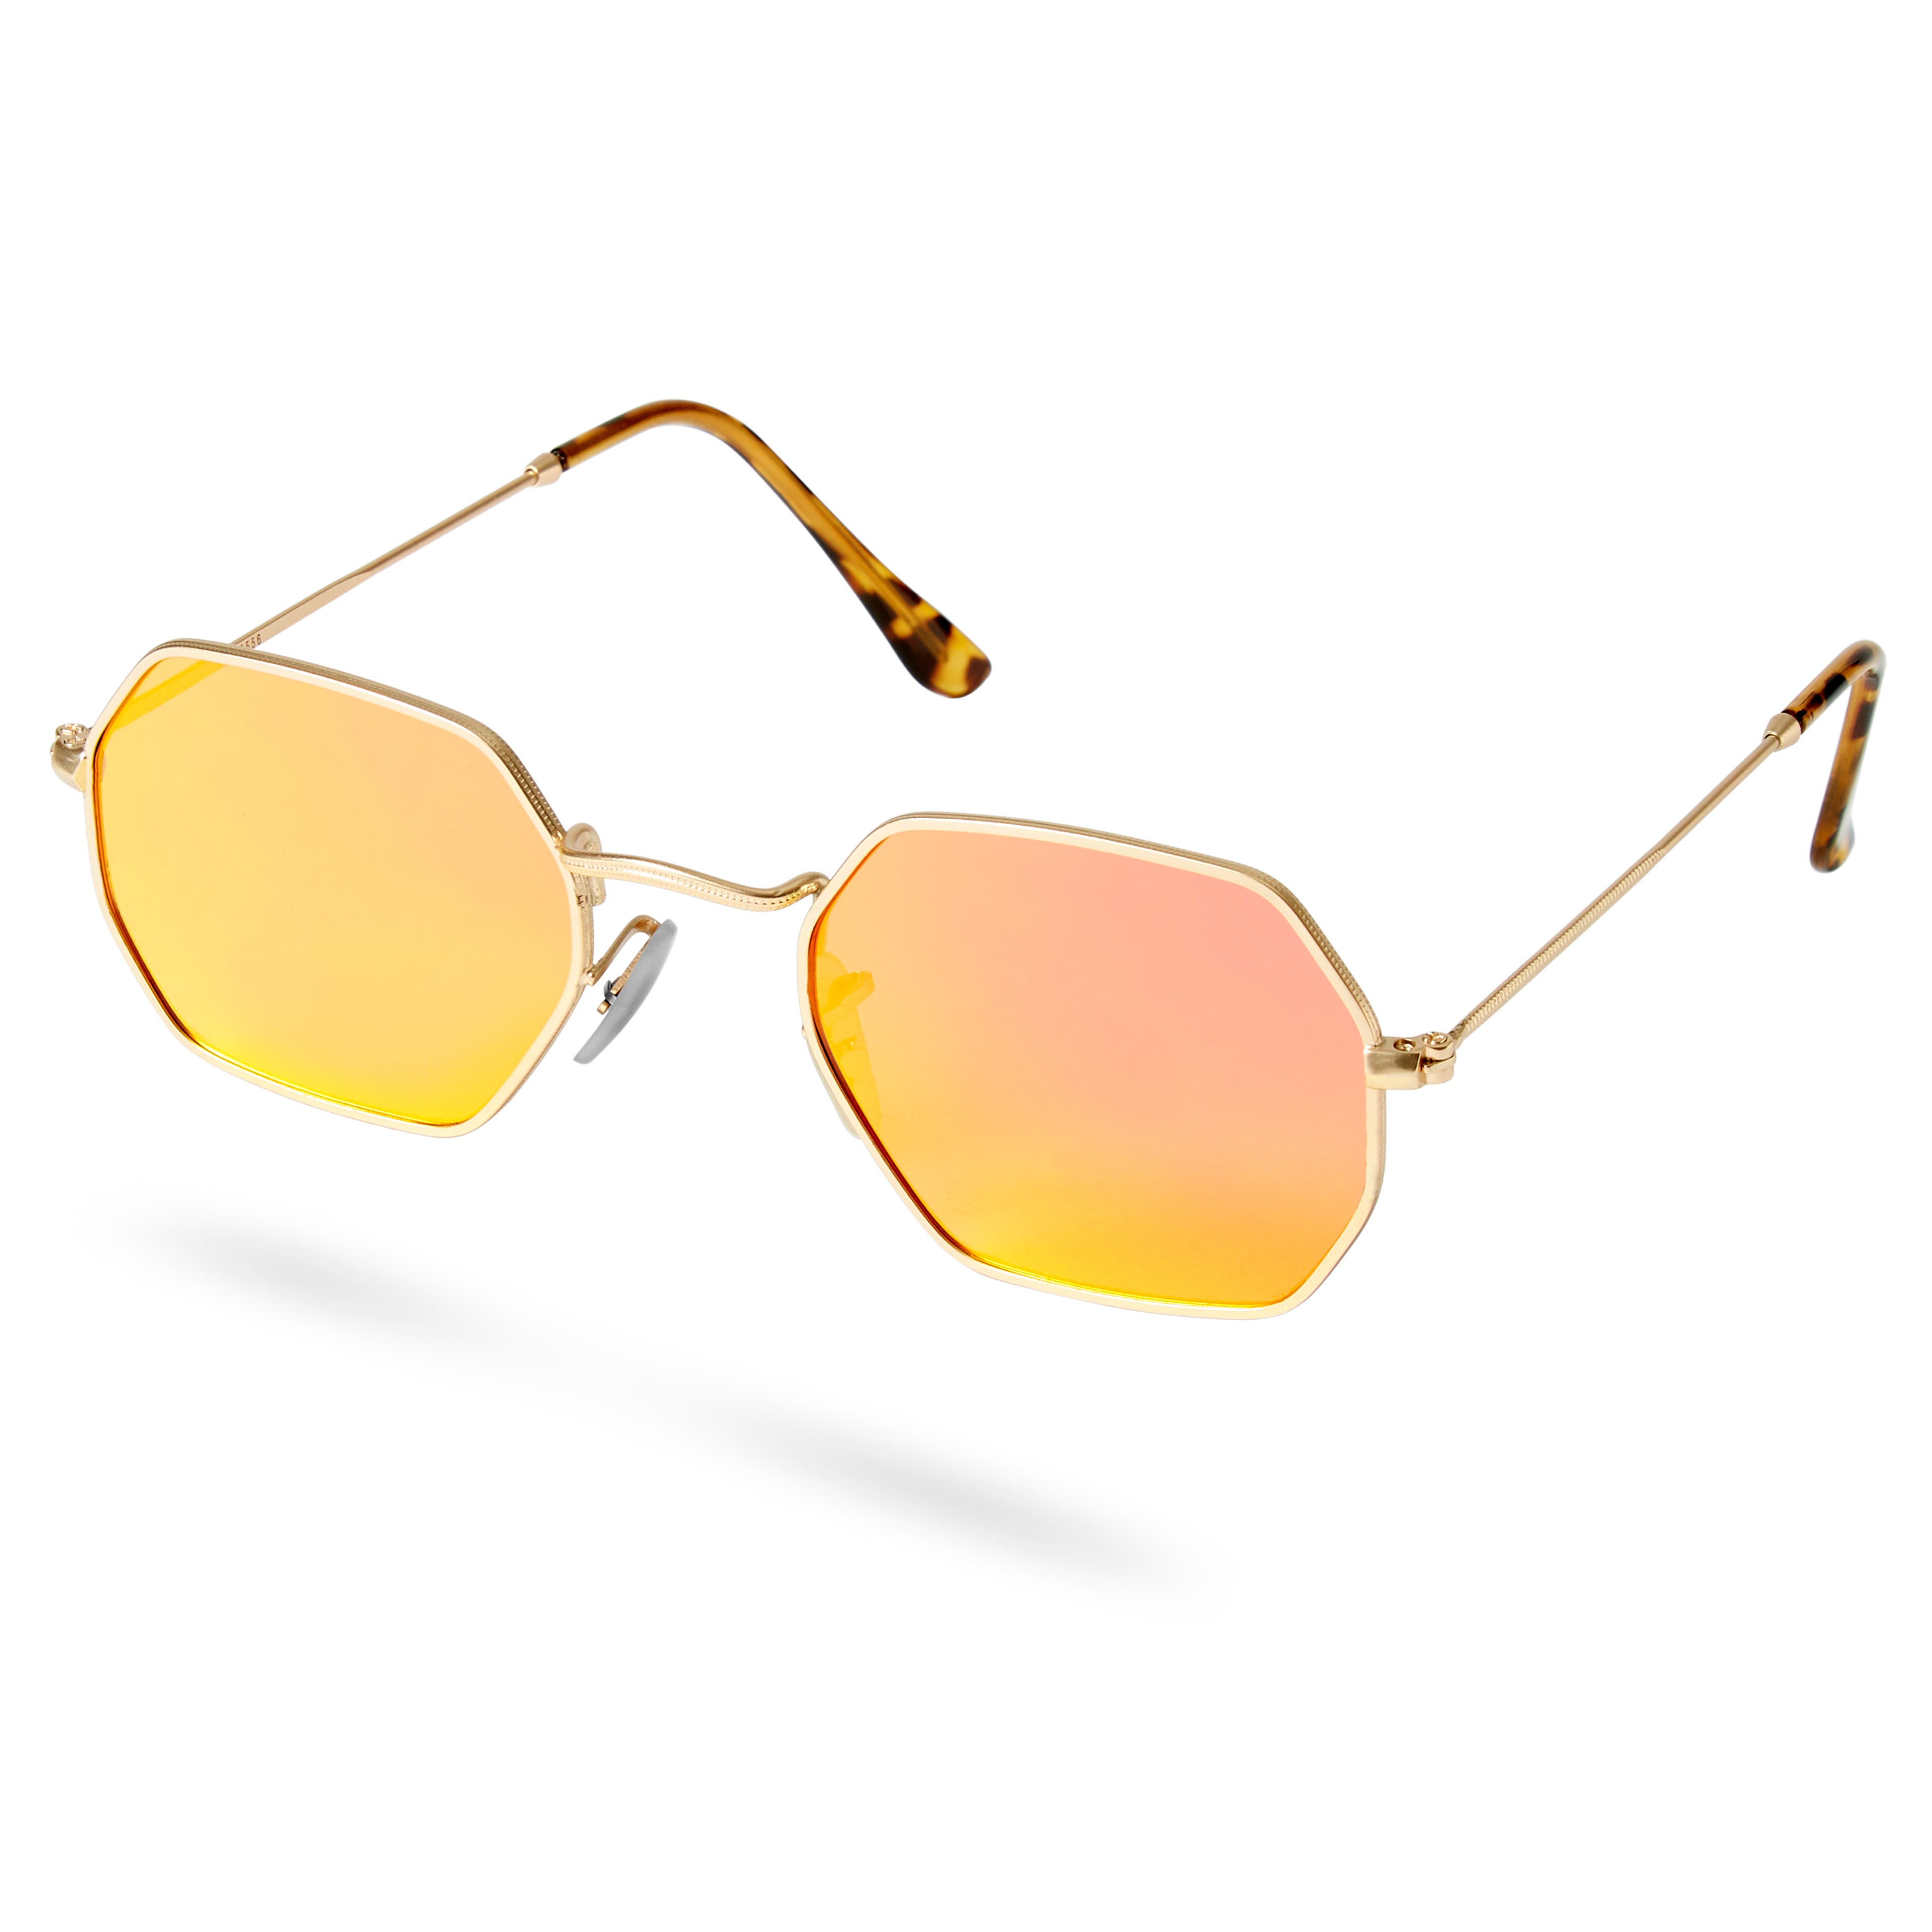 Groovy Gold-Tone & Orange Sunglasses